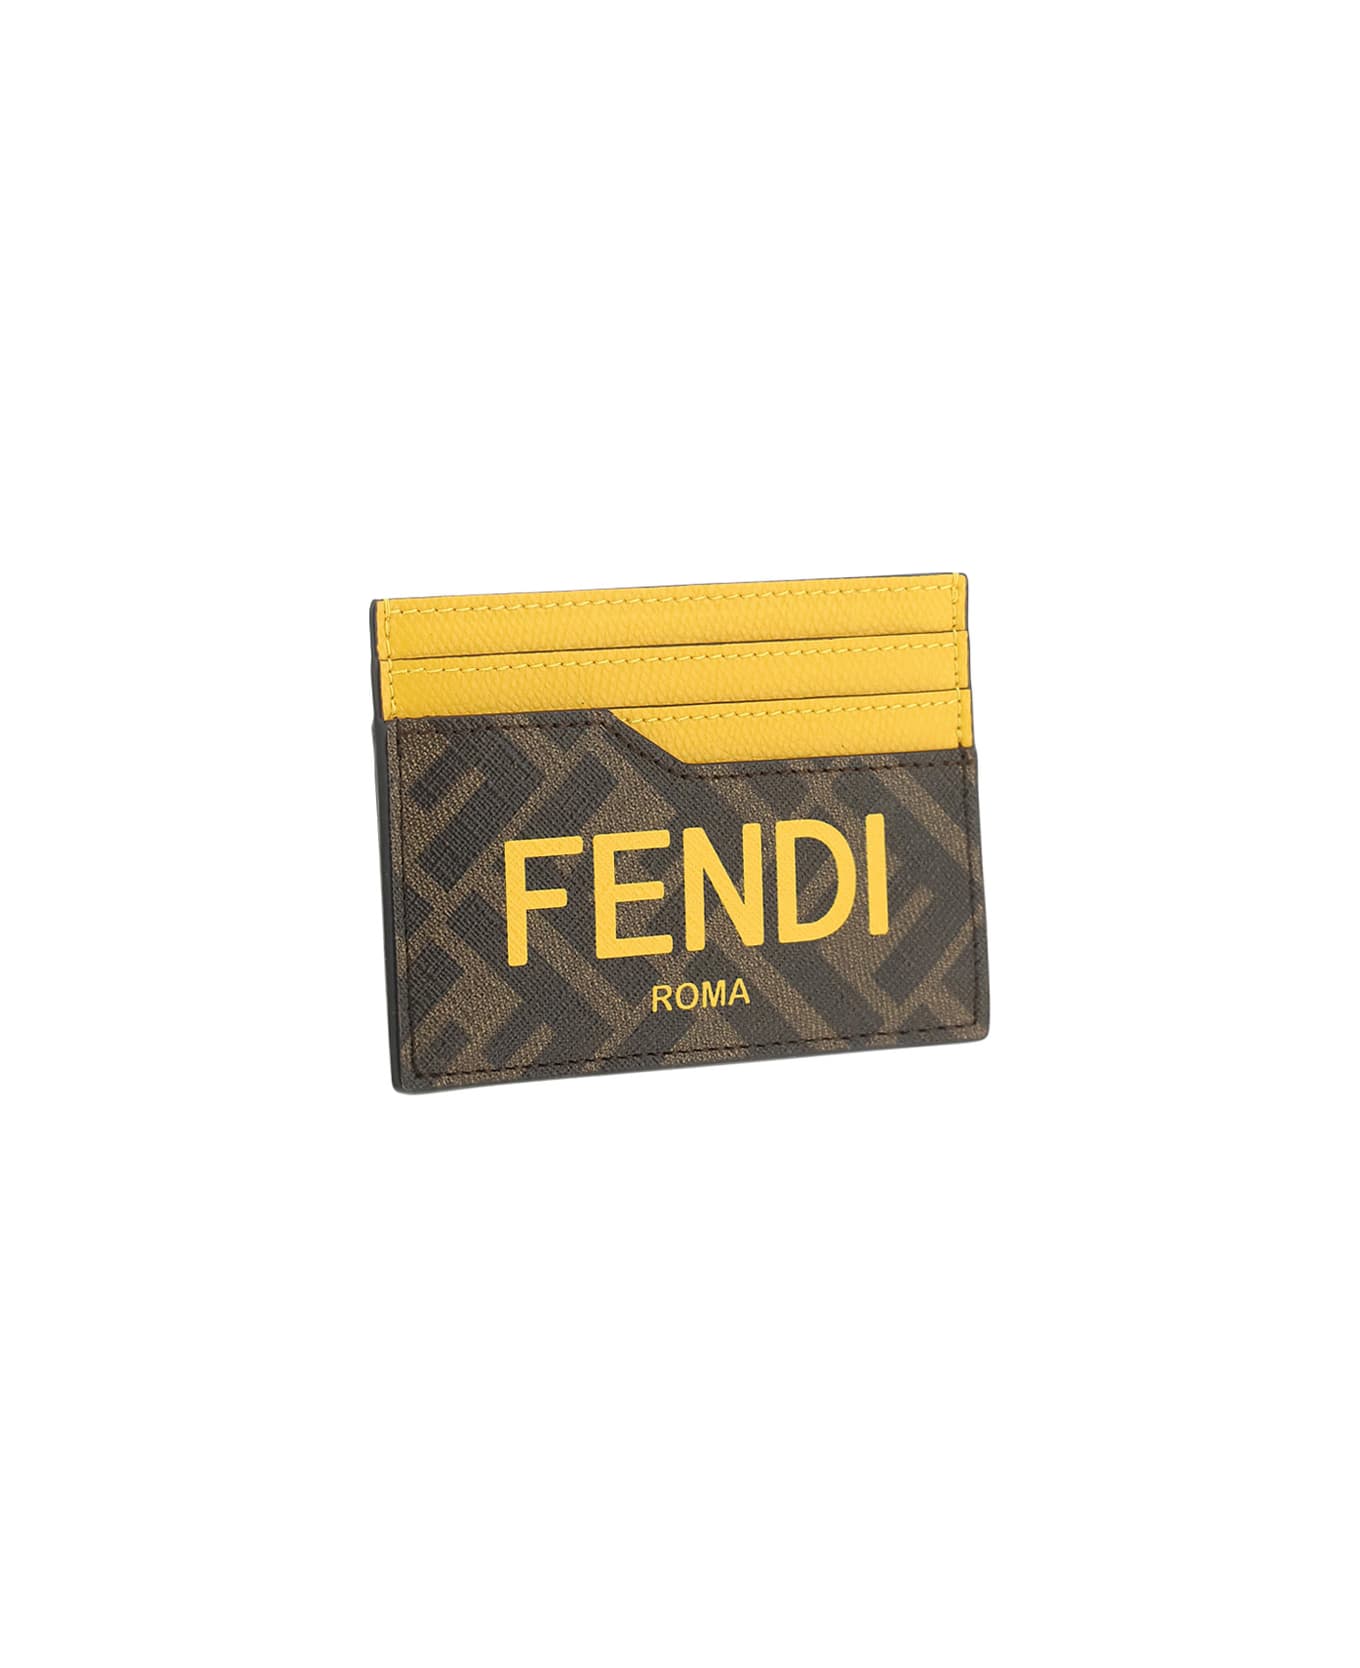 Fendi Ff Card Holder - Tbmr/giallo/sunfl